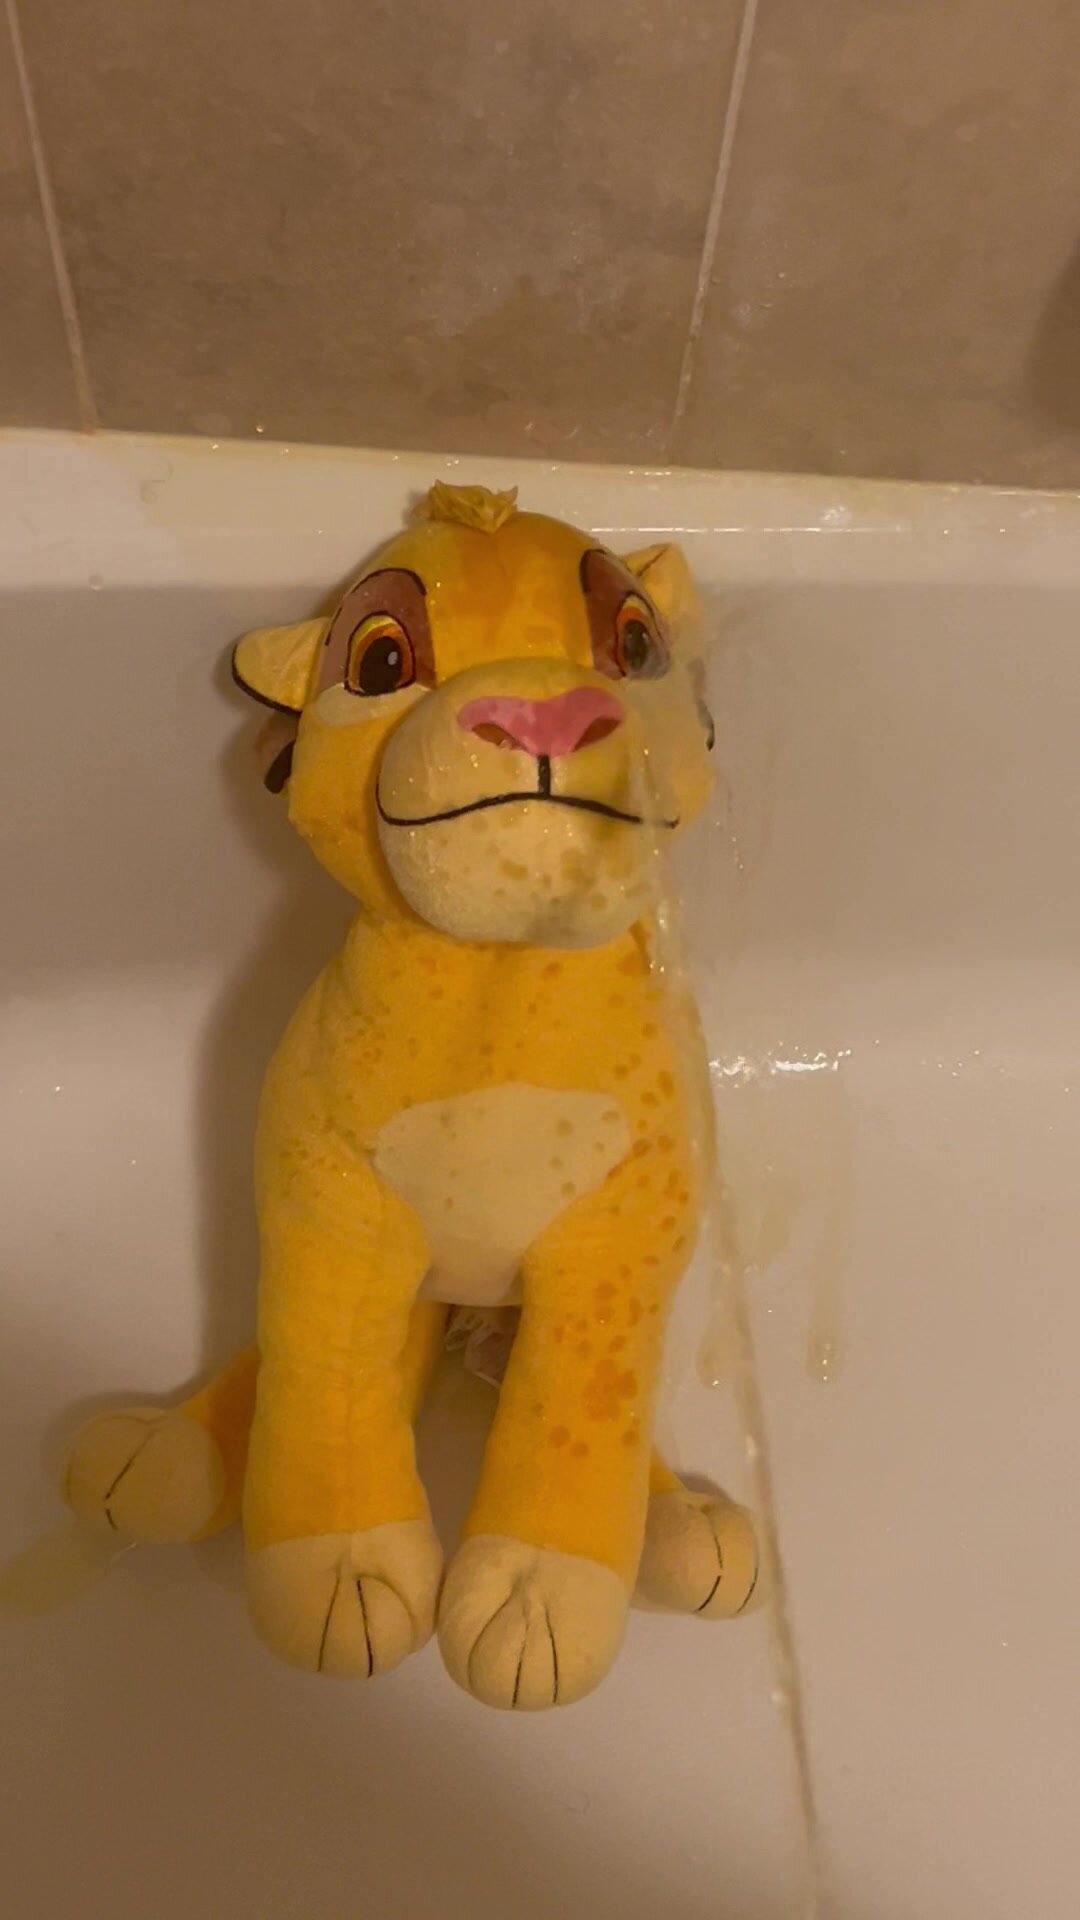 Simba WANTED a Golden Shower!